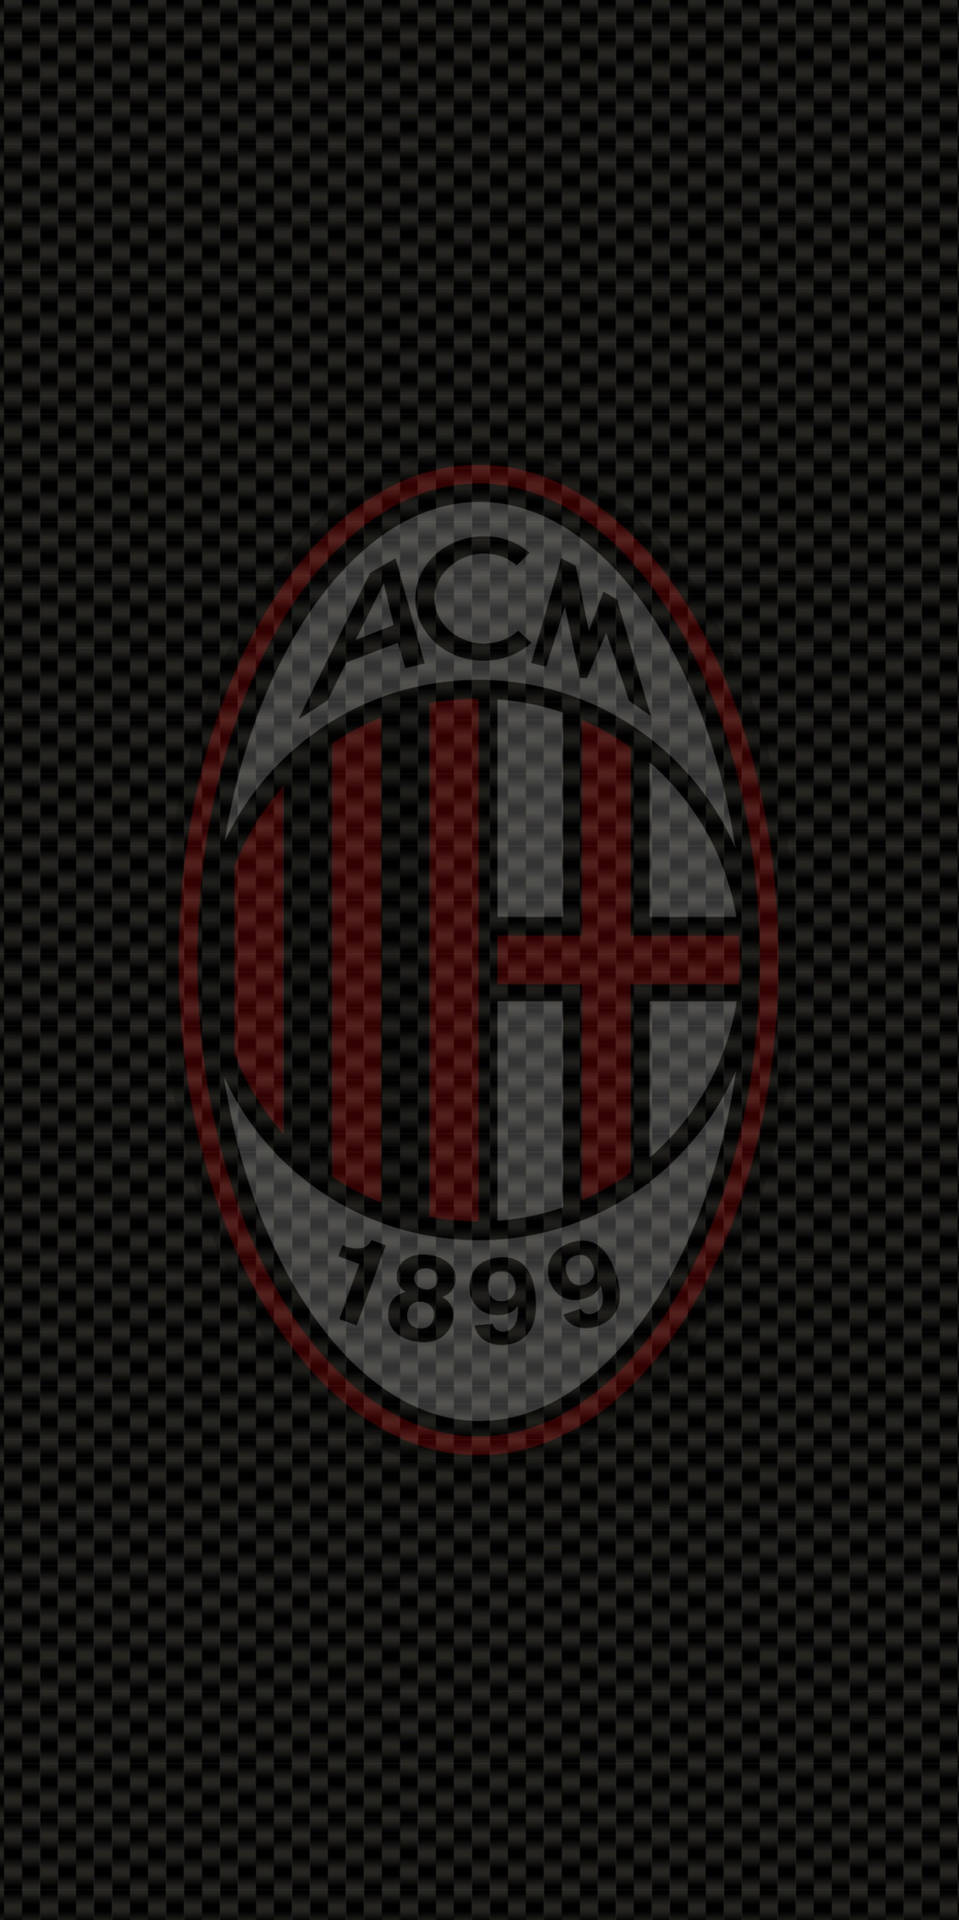 Checkered AC Milan Wallpaper